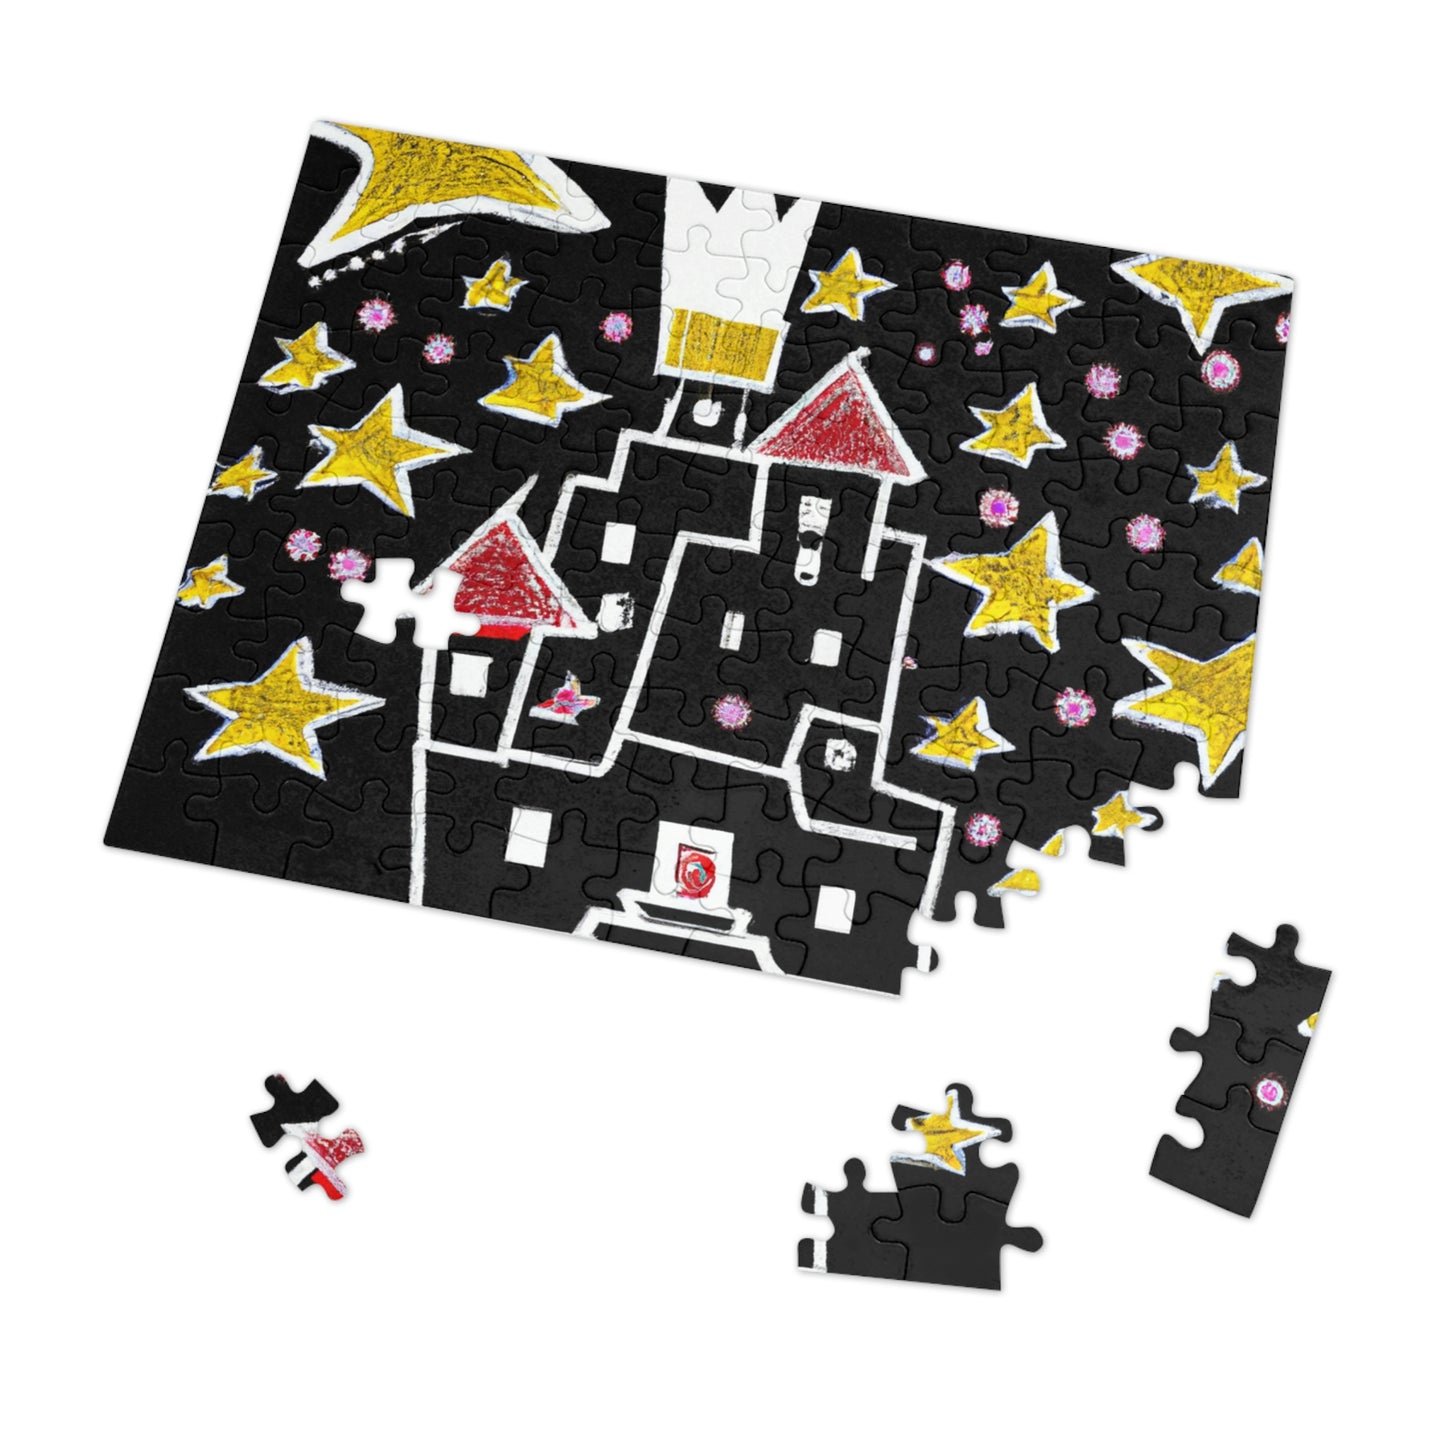 "Heaven's Glittering Palace" - The Alien Jigsaw Puzzle